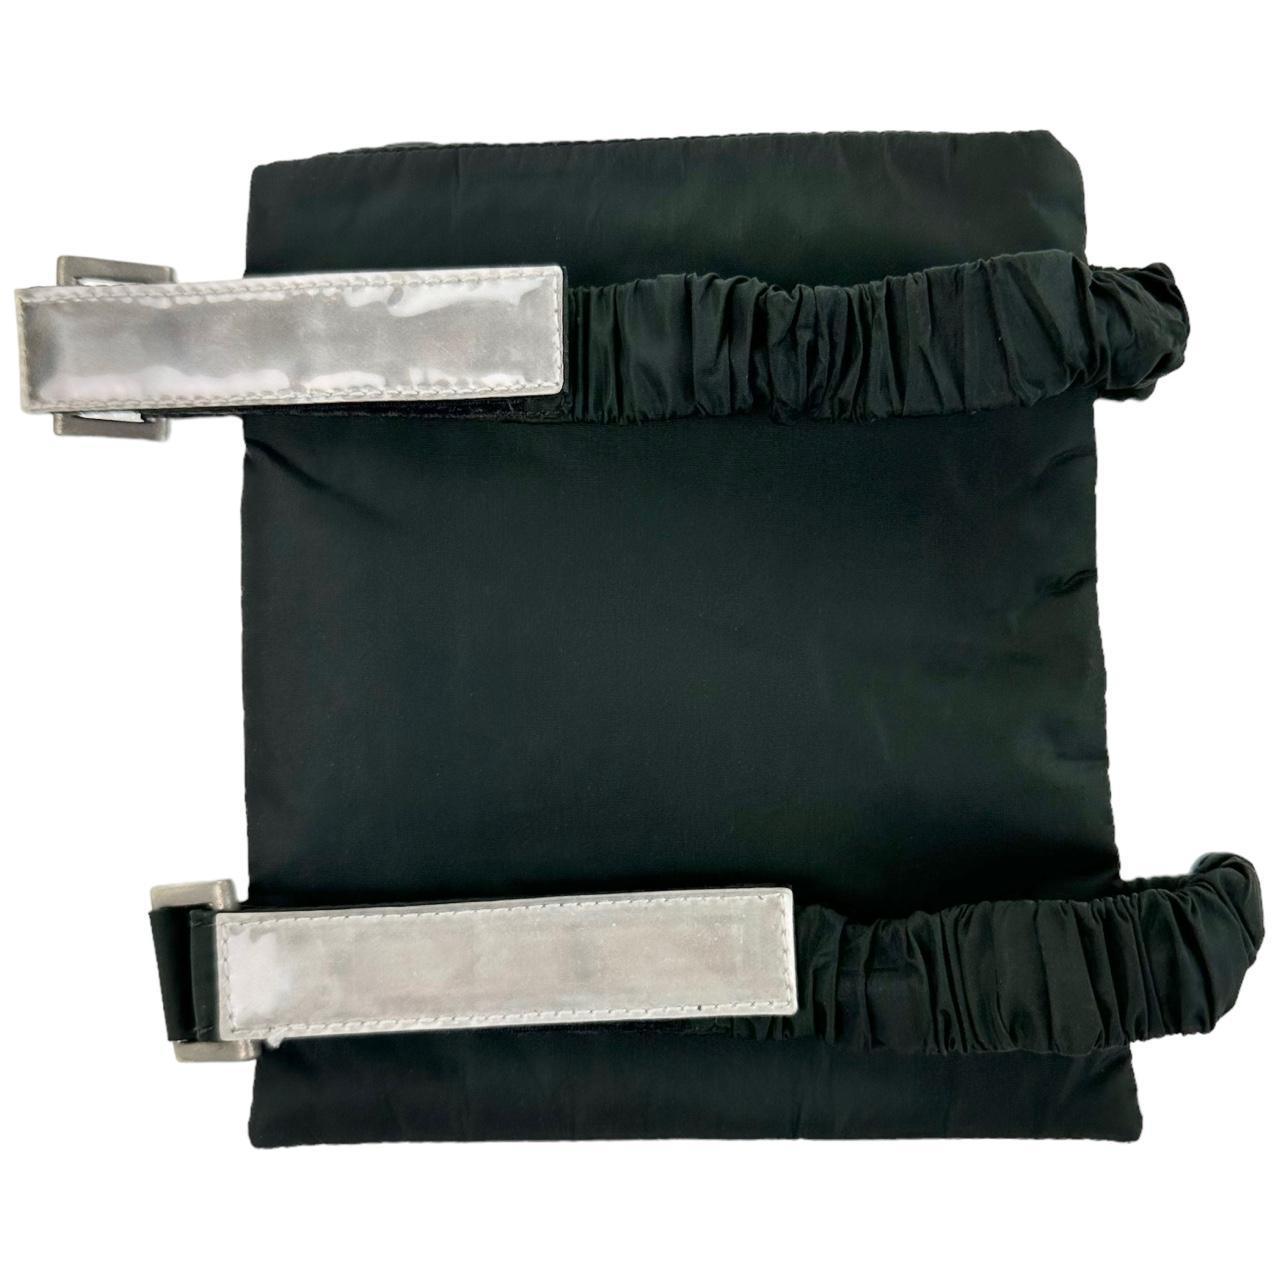 Vintage 1999 Prada Sport Arm Bag - Known Source